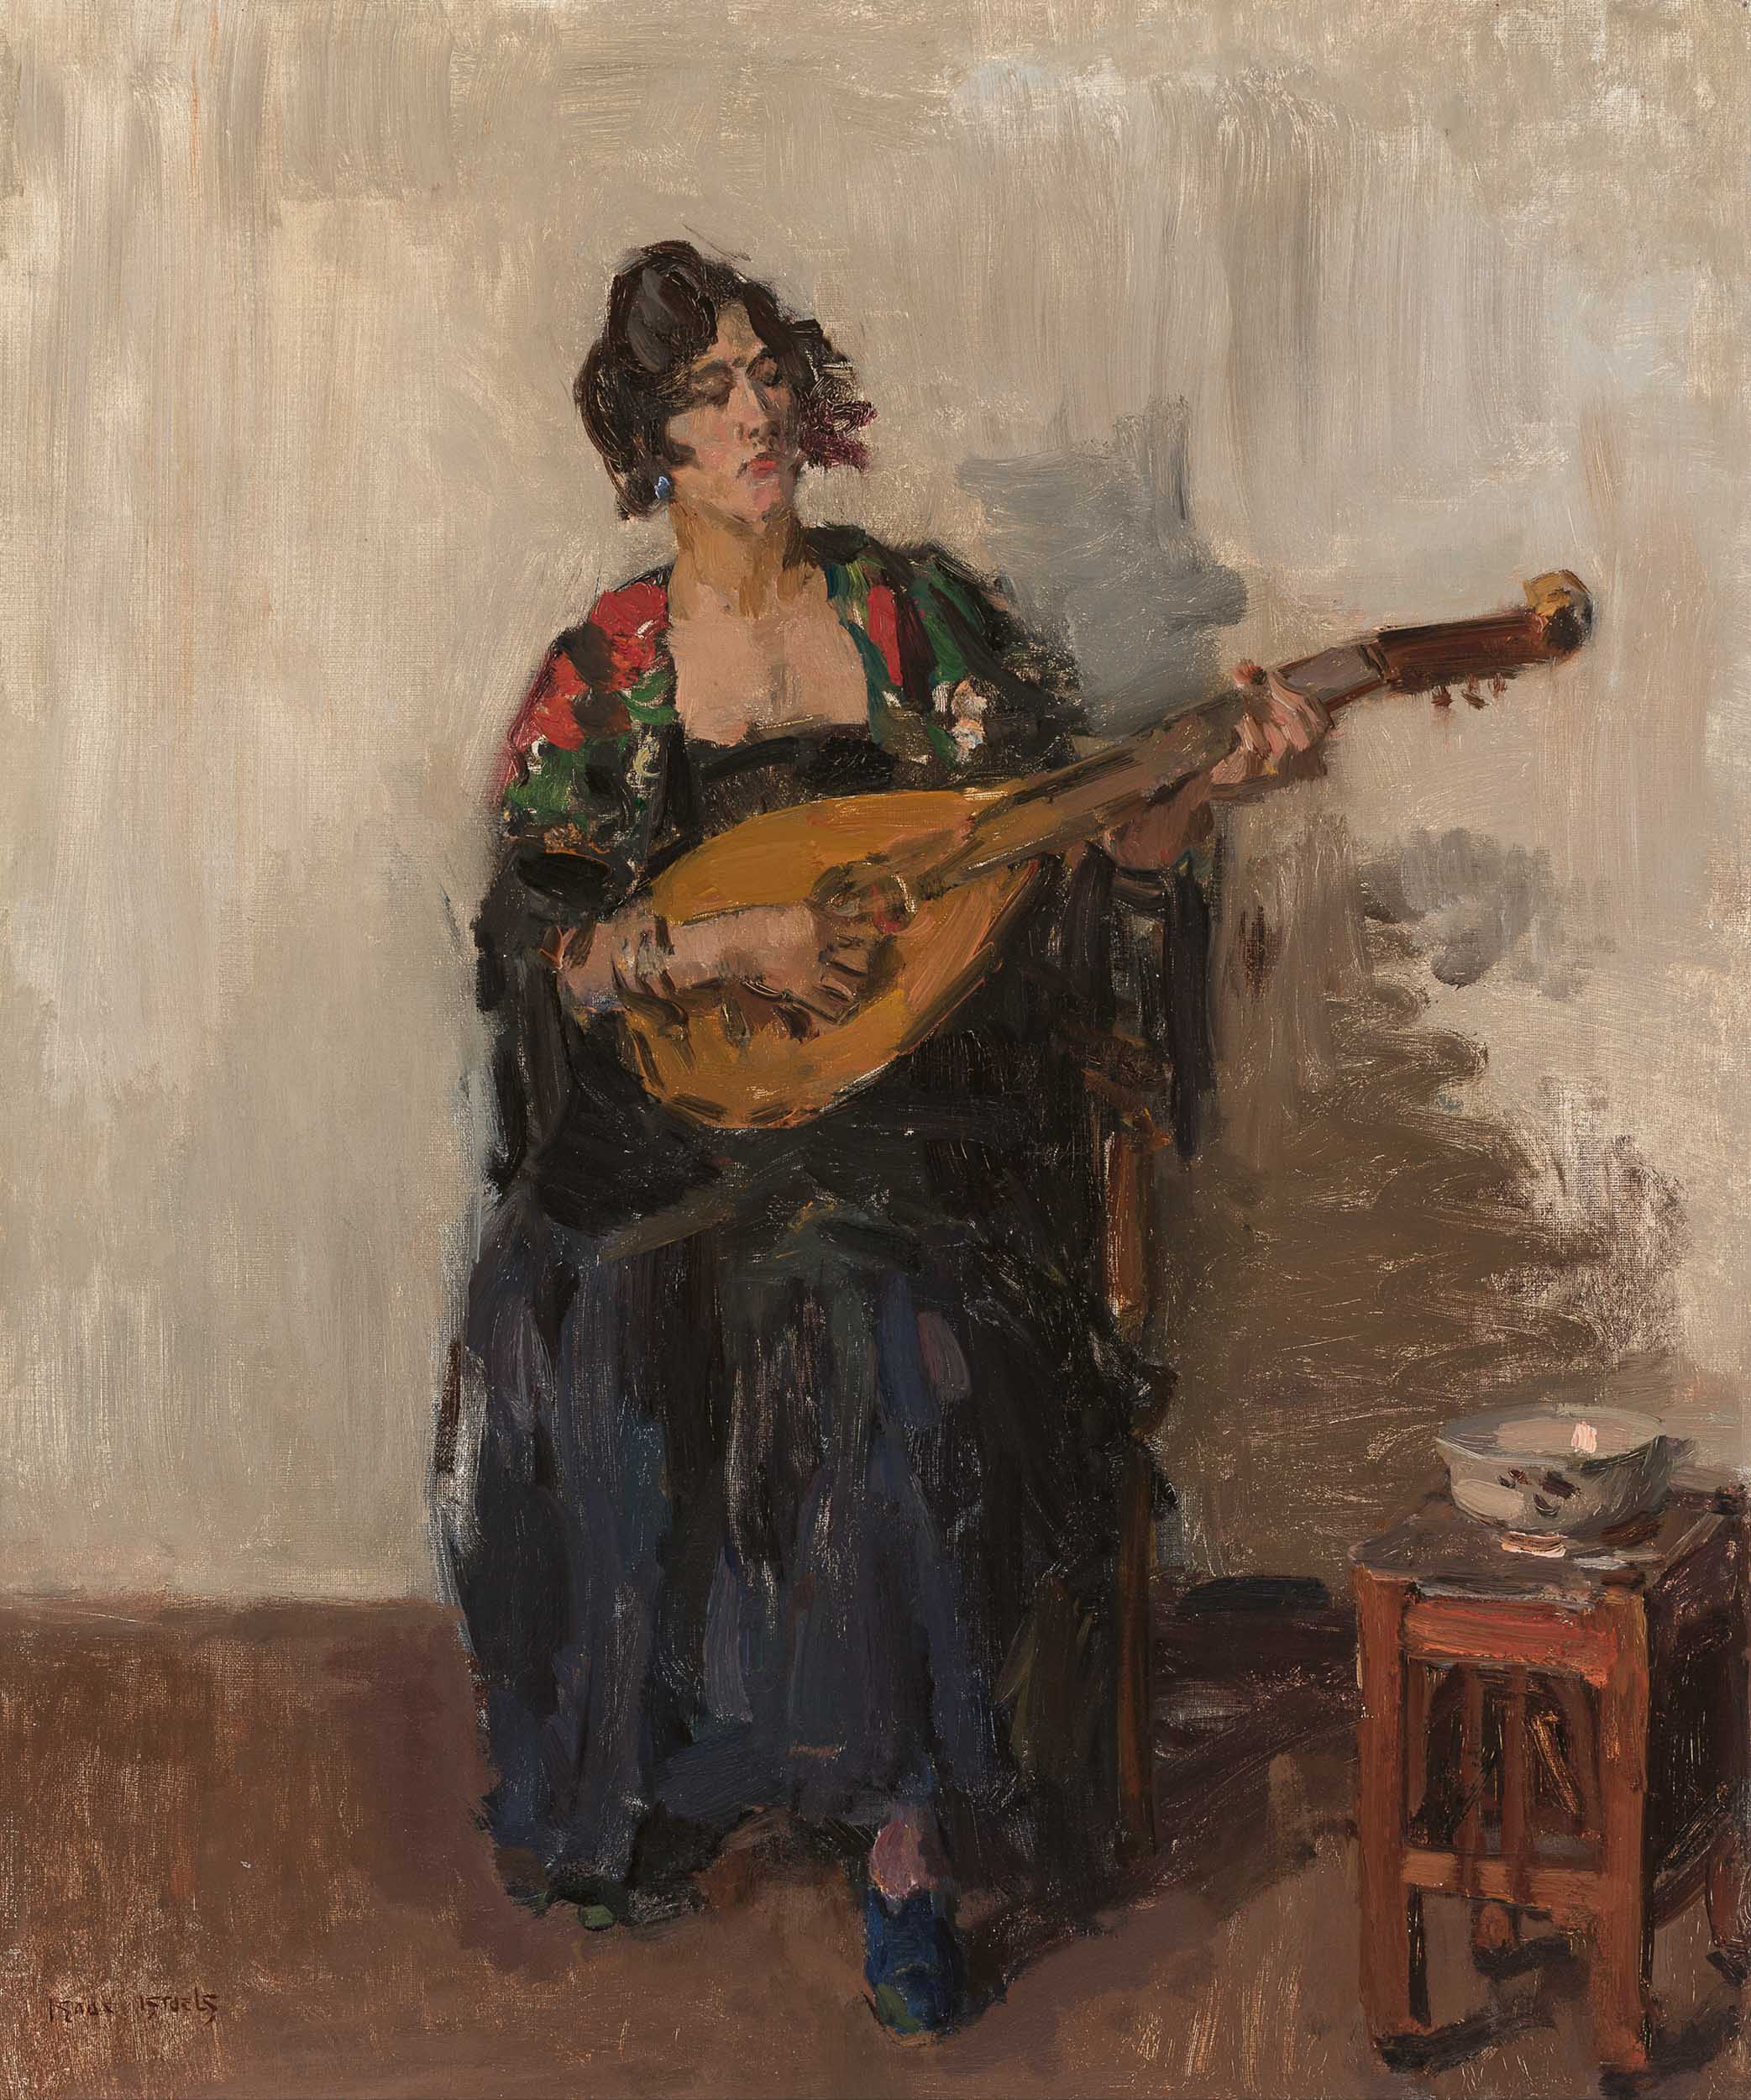 Guusje van Dongen playing the Mandolin (c.1916)